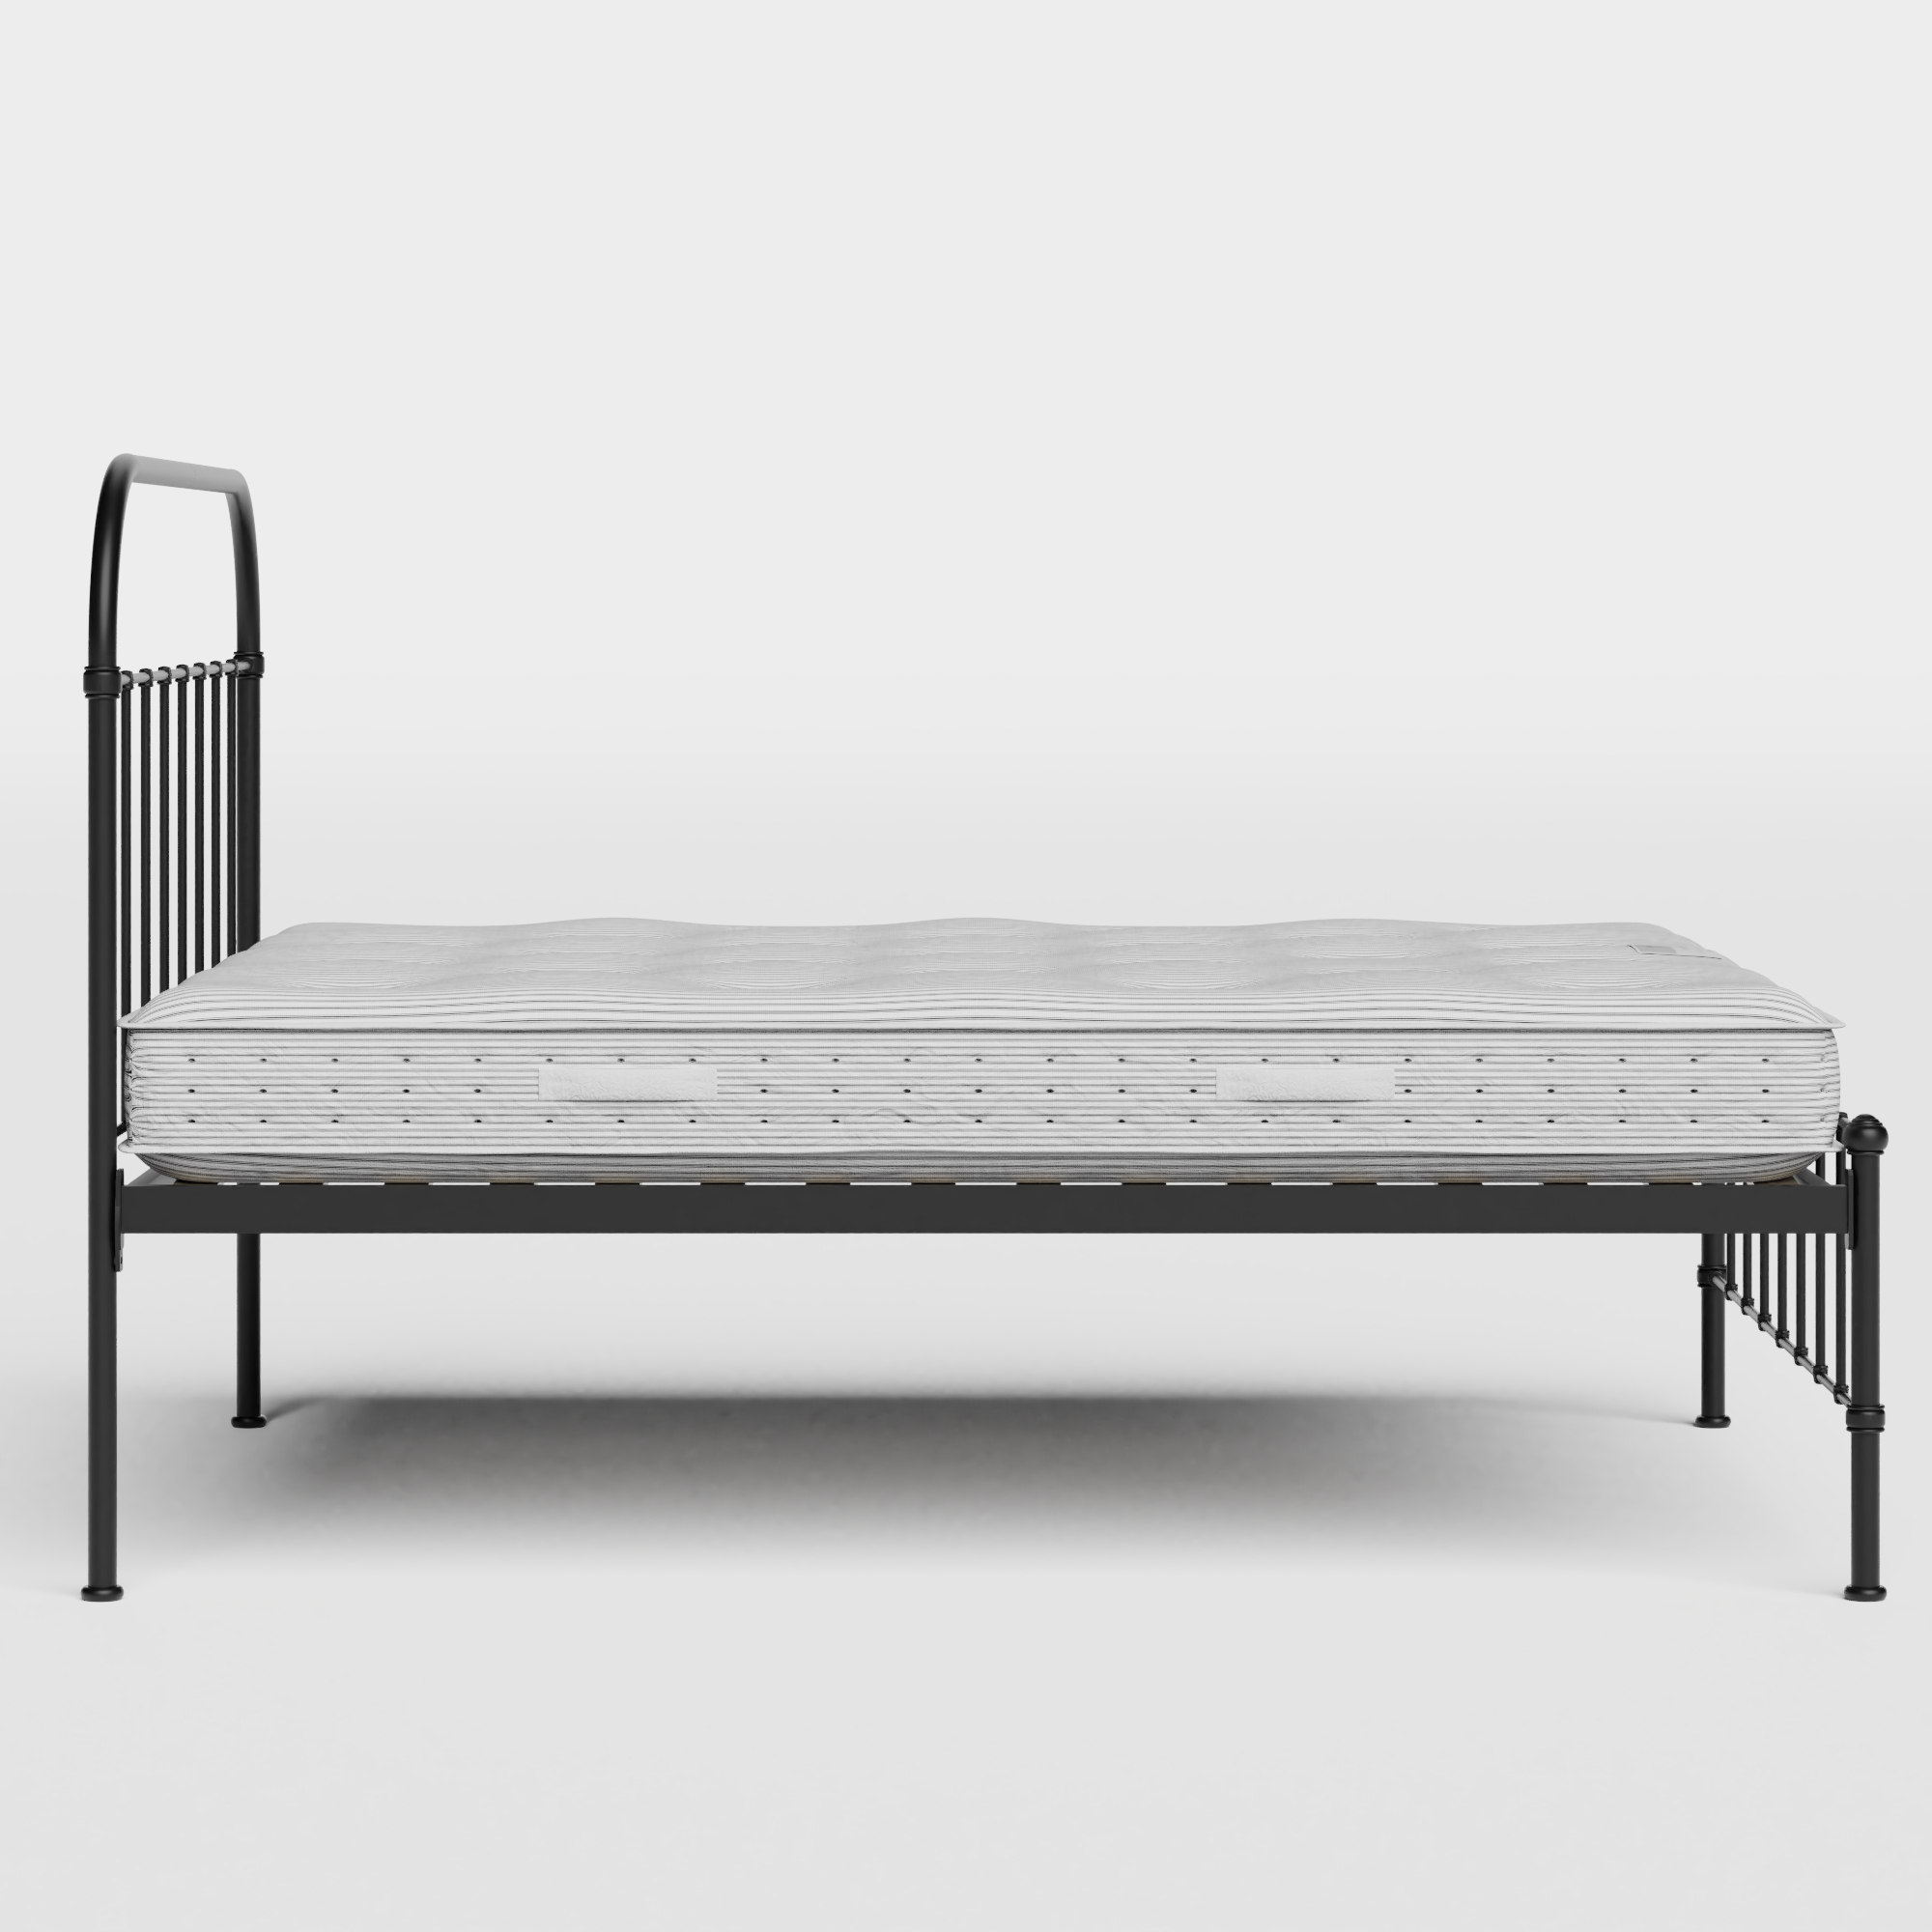 Solomon iron/metal bed in black with Juno mattress